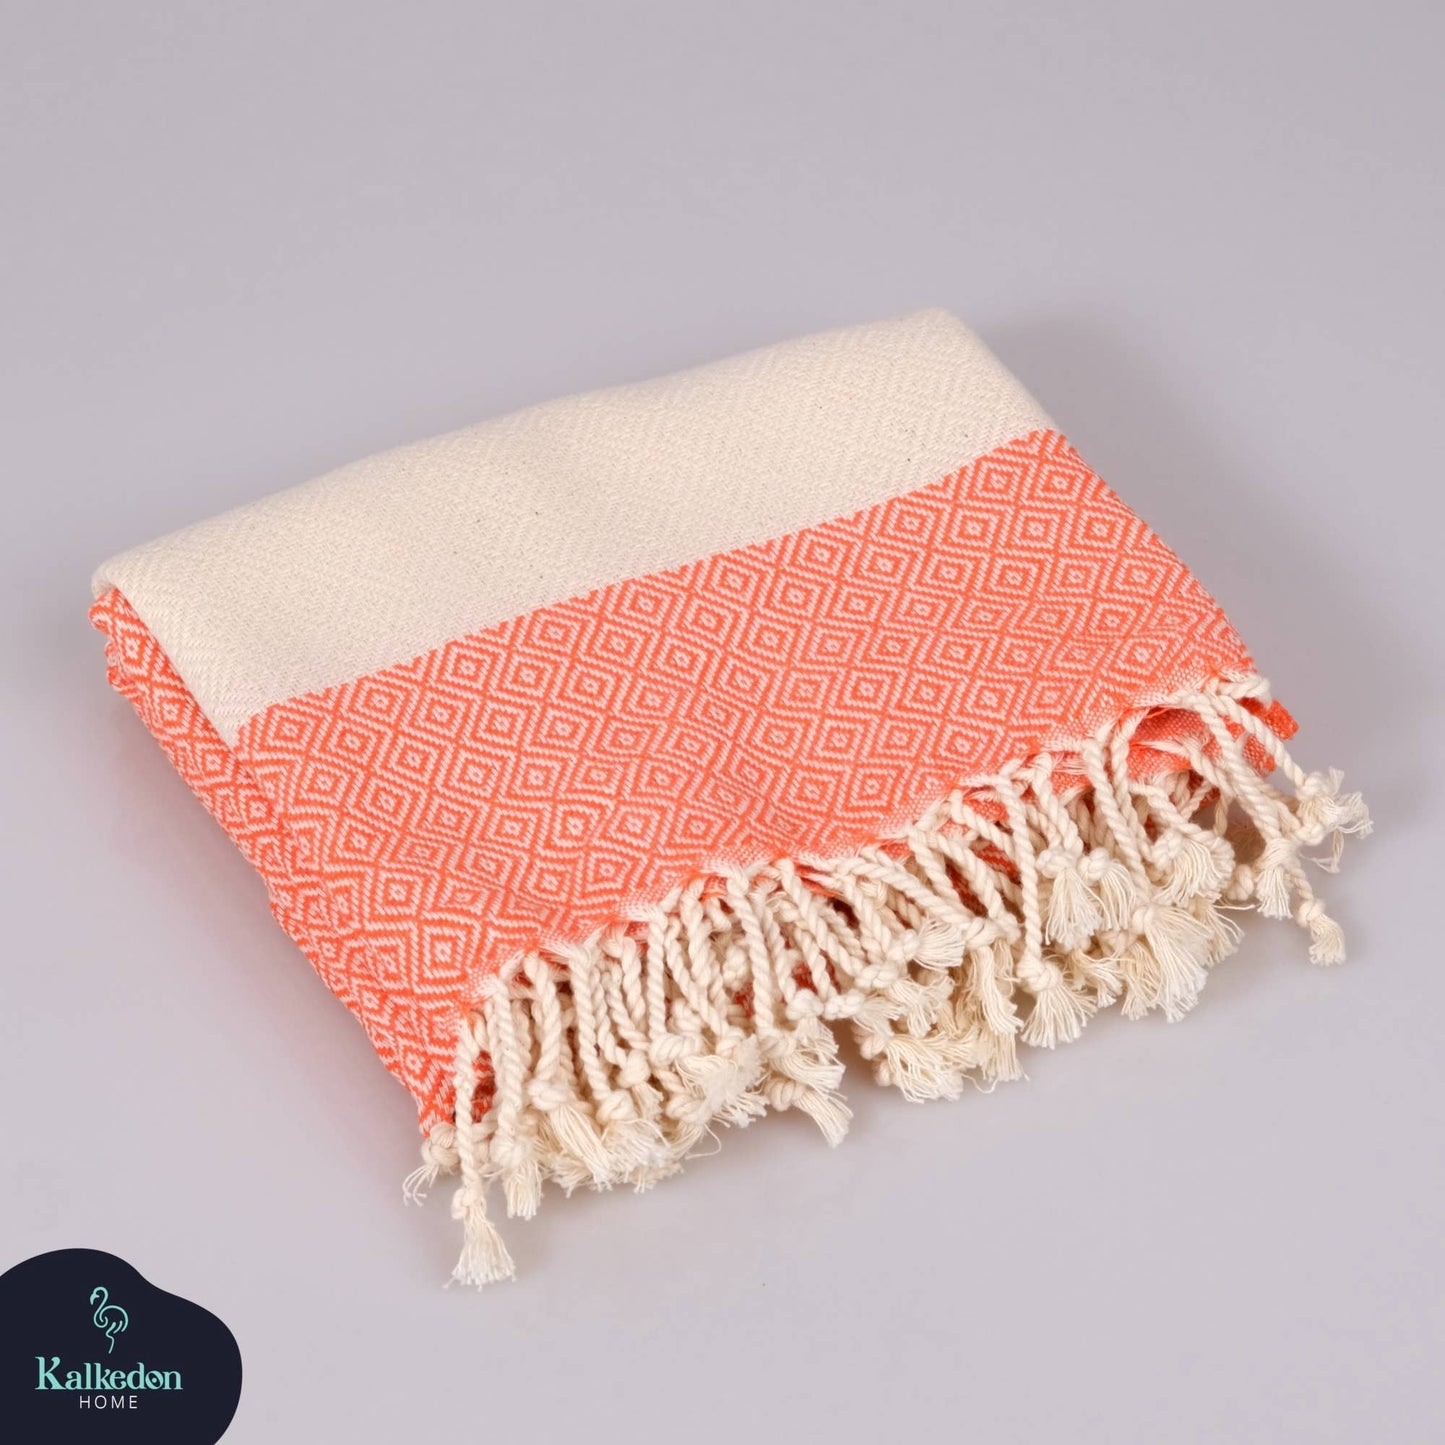 Turkish Towel | Peshtemal | Sand Resistant Beach Towel….Orange